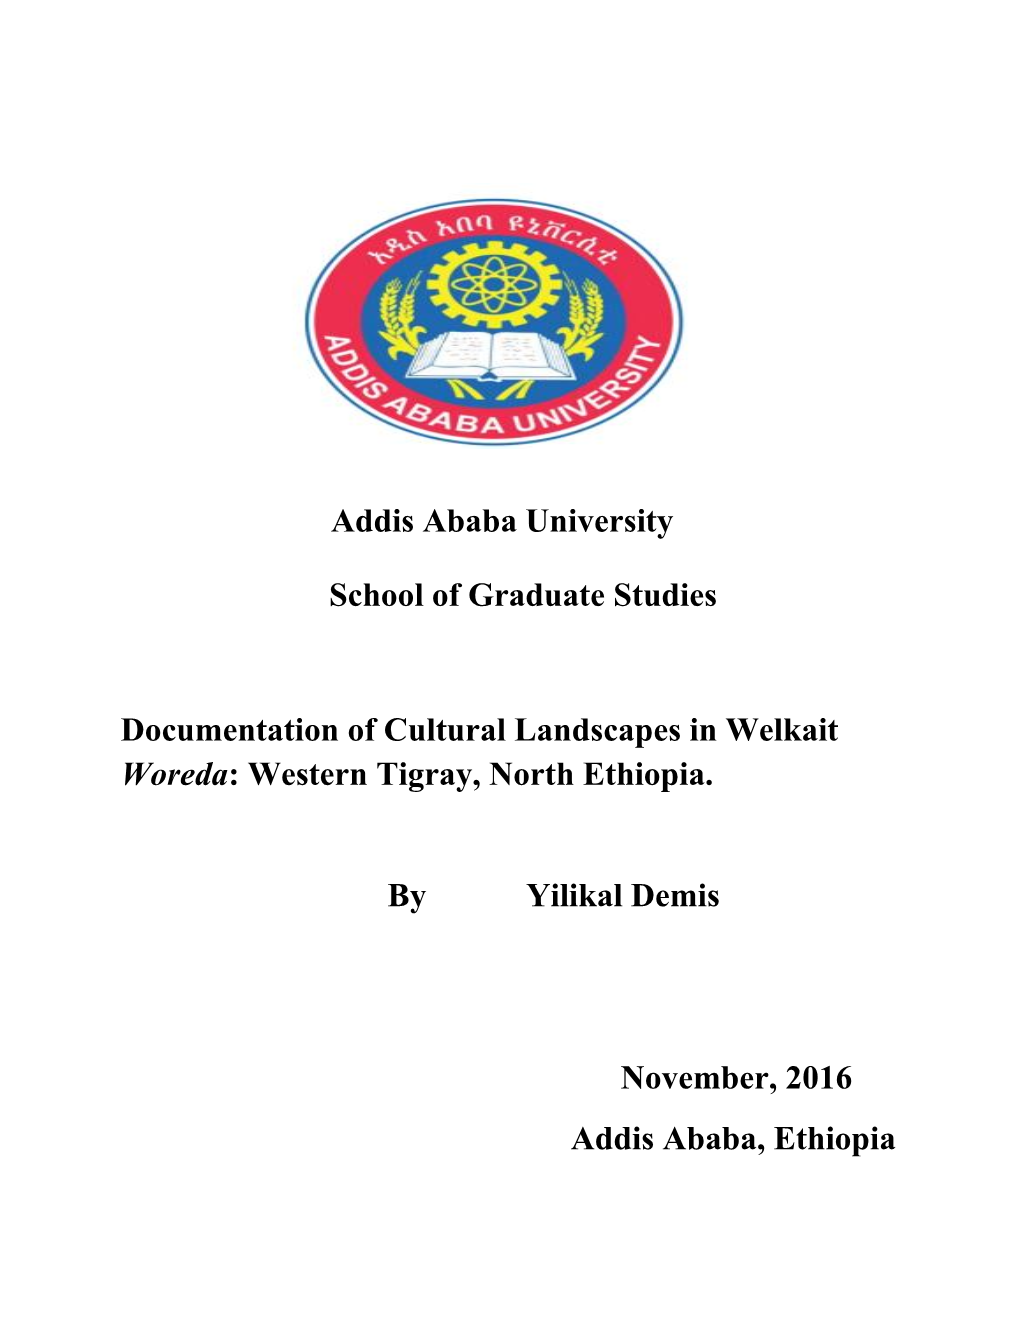 Addis Ababa University School of Graduate Studies Documentation of Cultural Landscapes in Welkait Woreda: Western Tigray, North